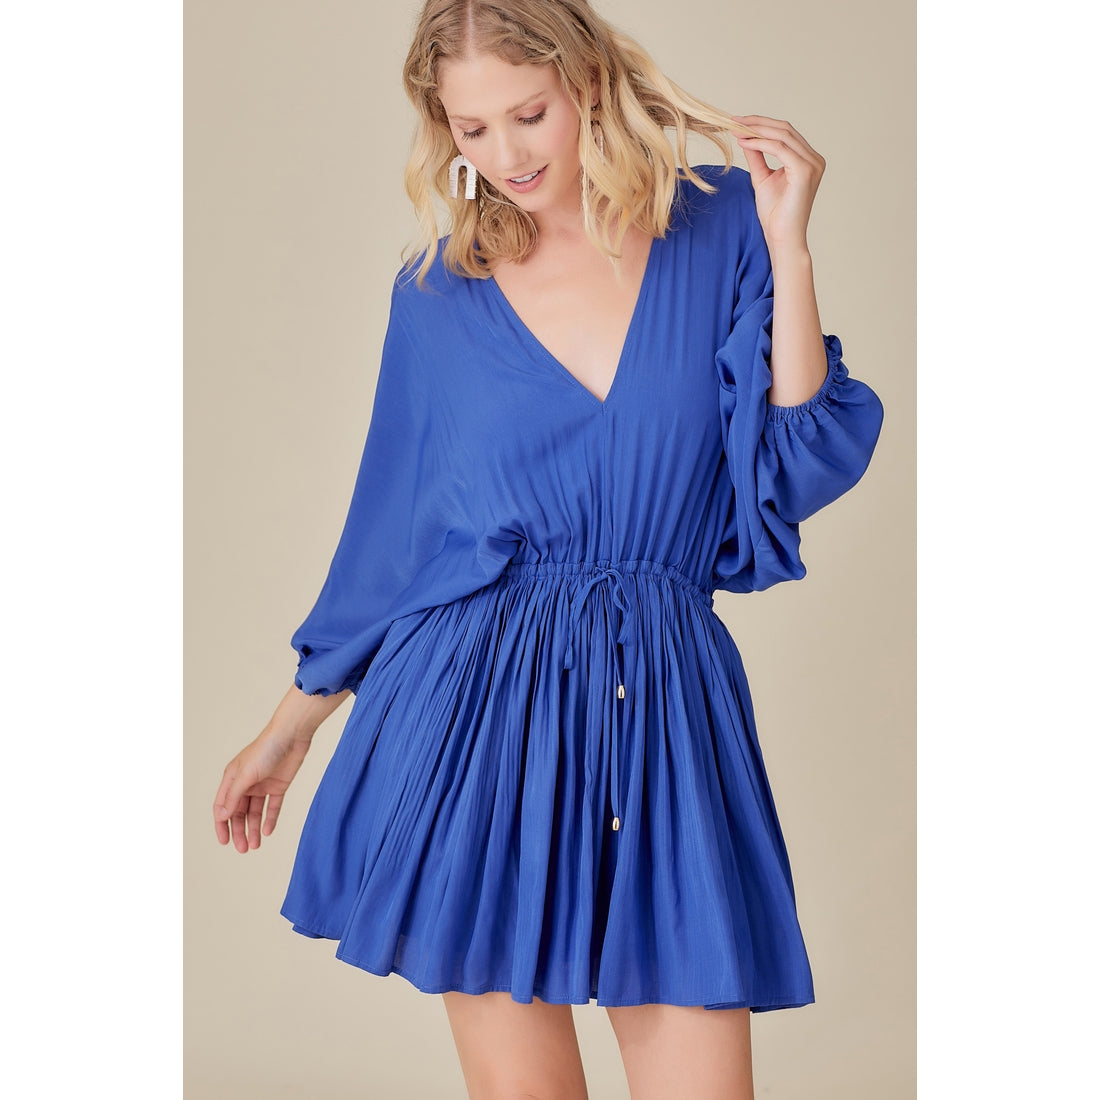 Blue Pacific Mini Dress in Size S, M, or L